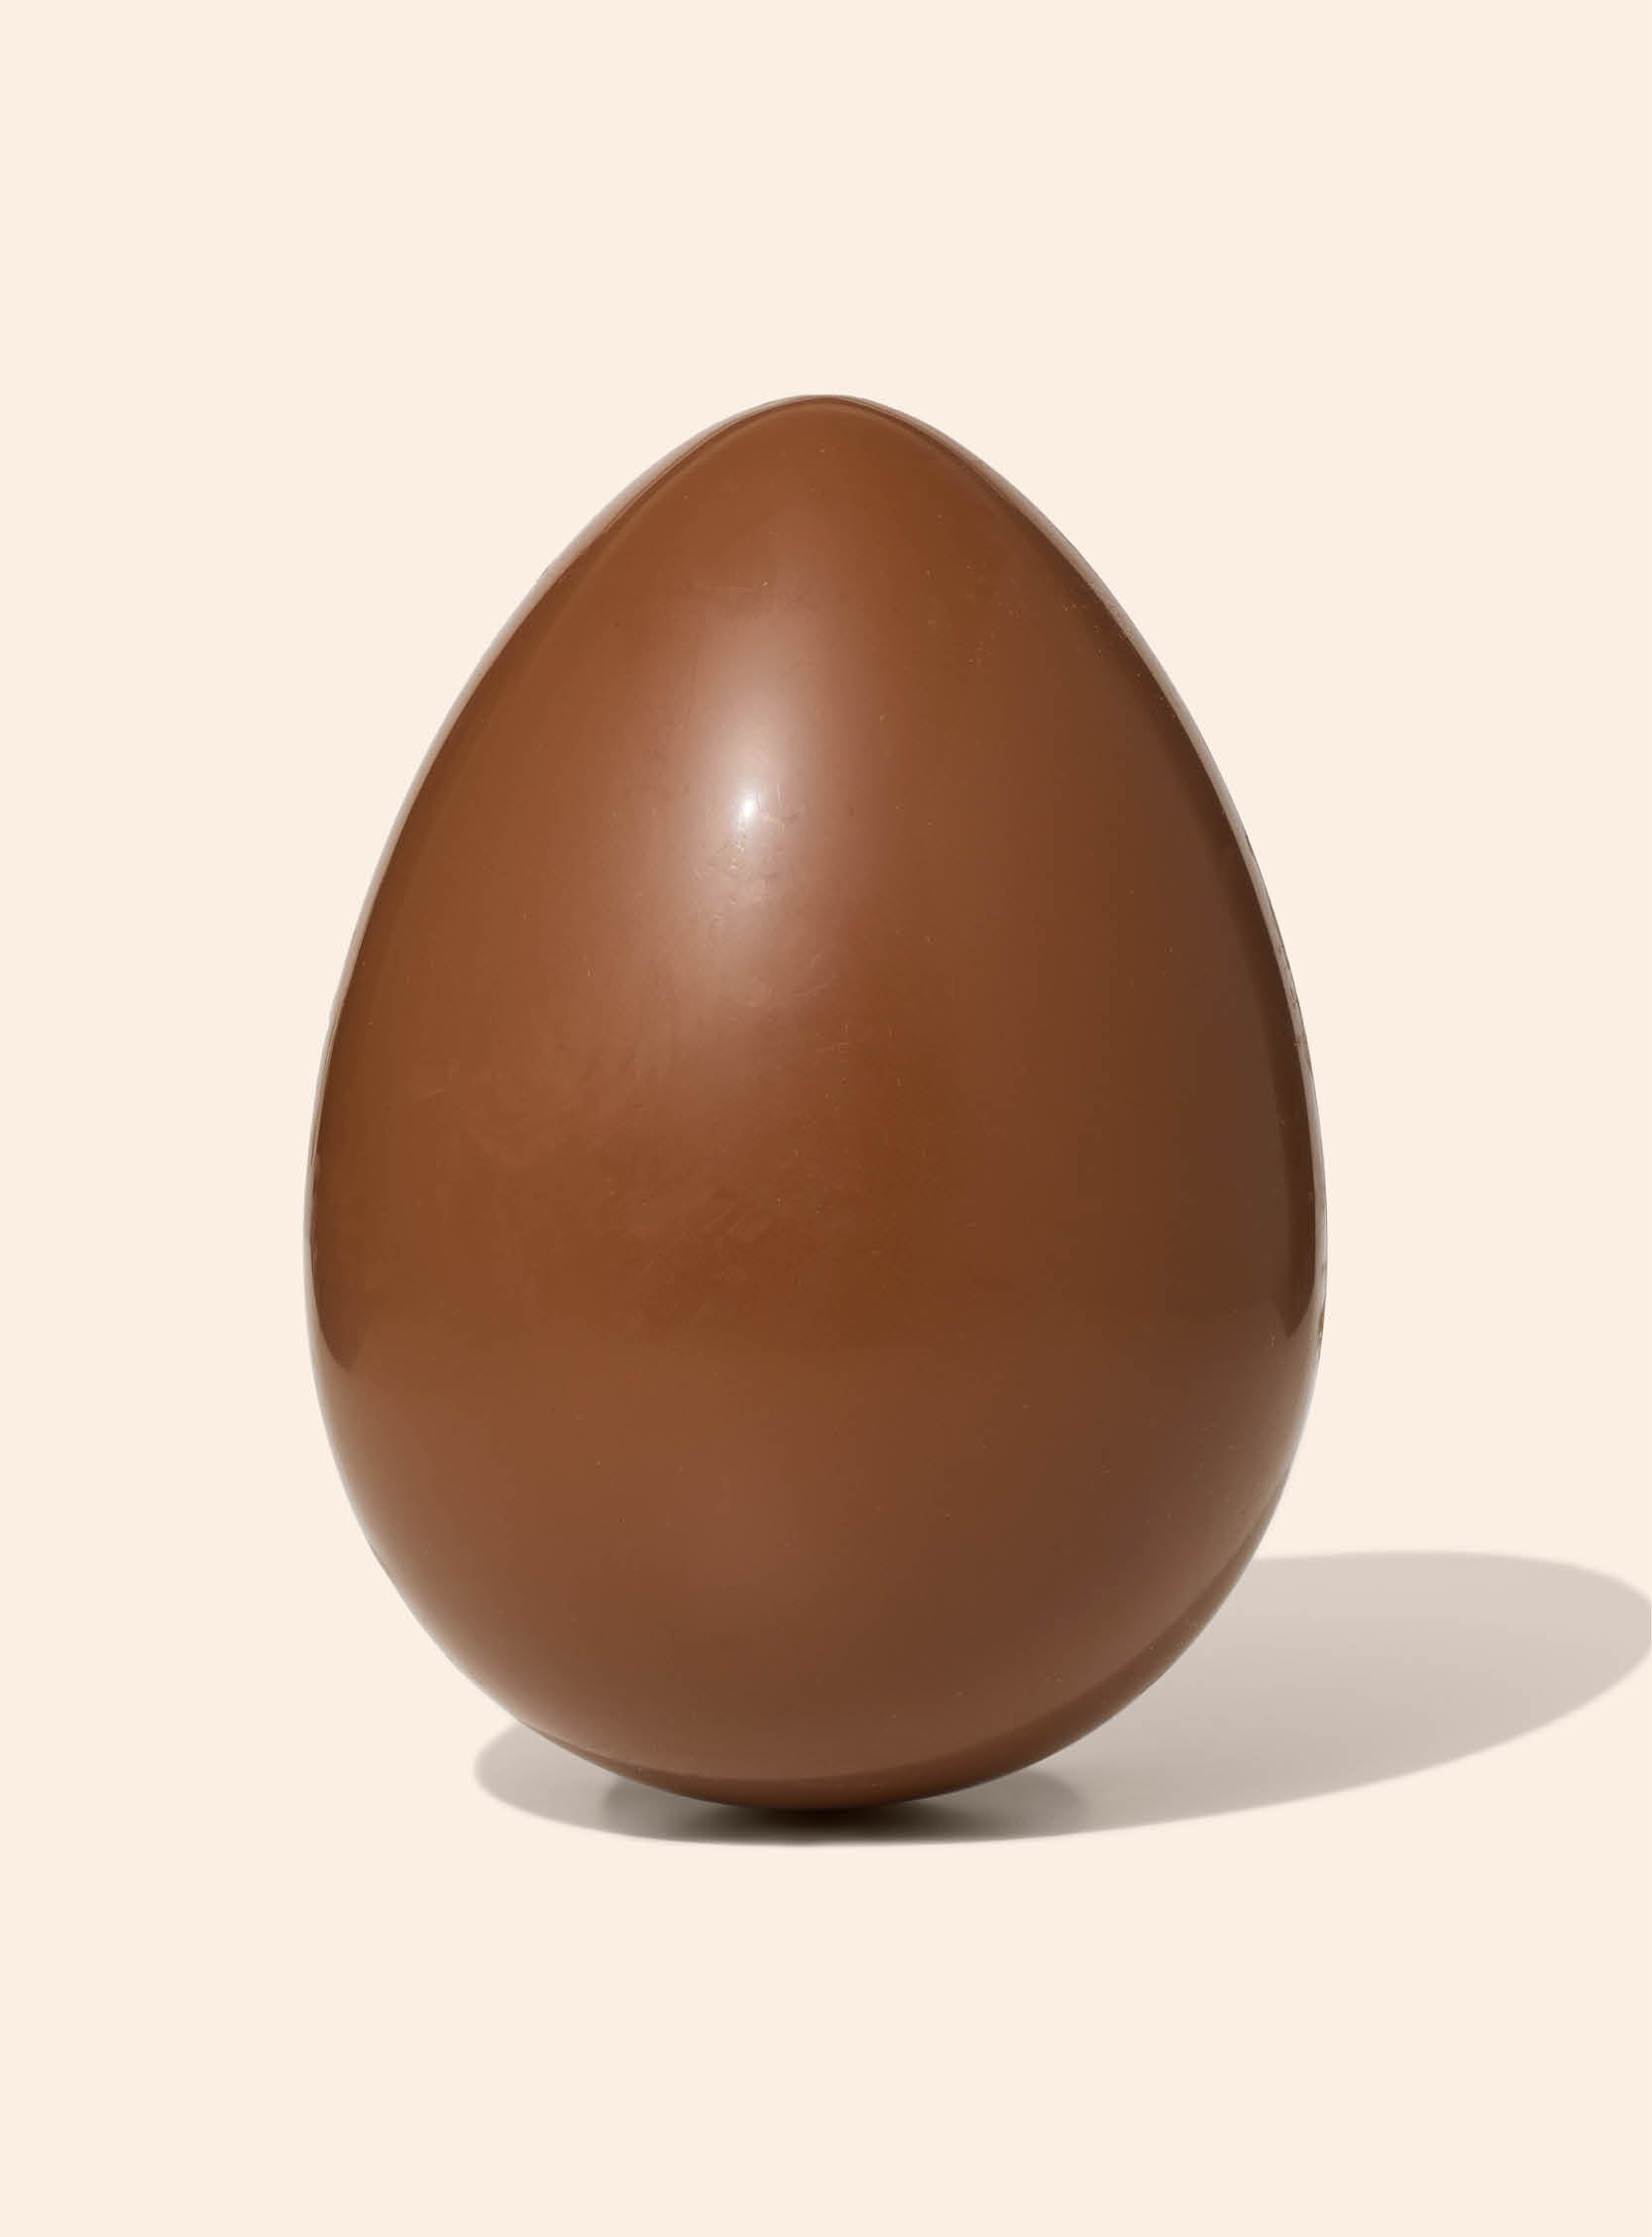 Giant Milk Chocolate Easter Egg